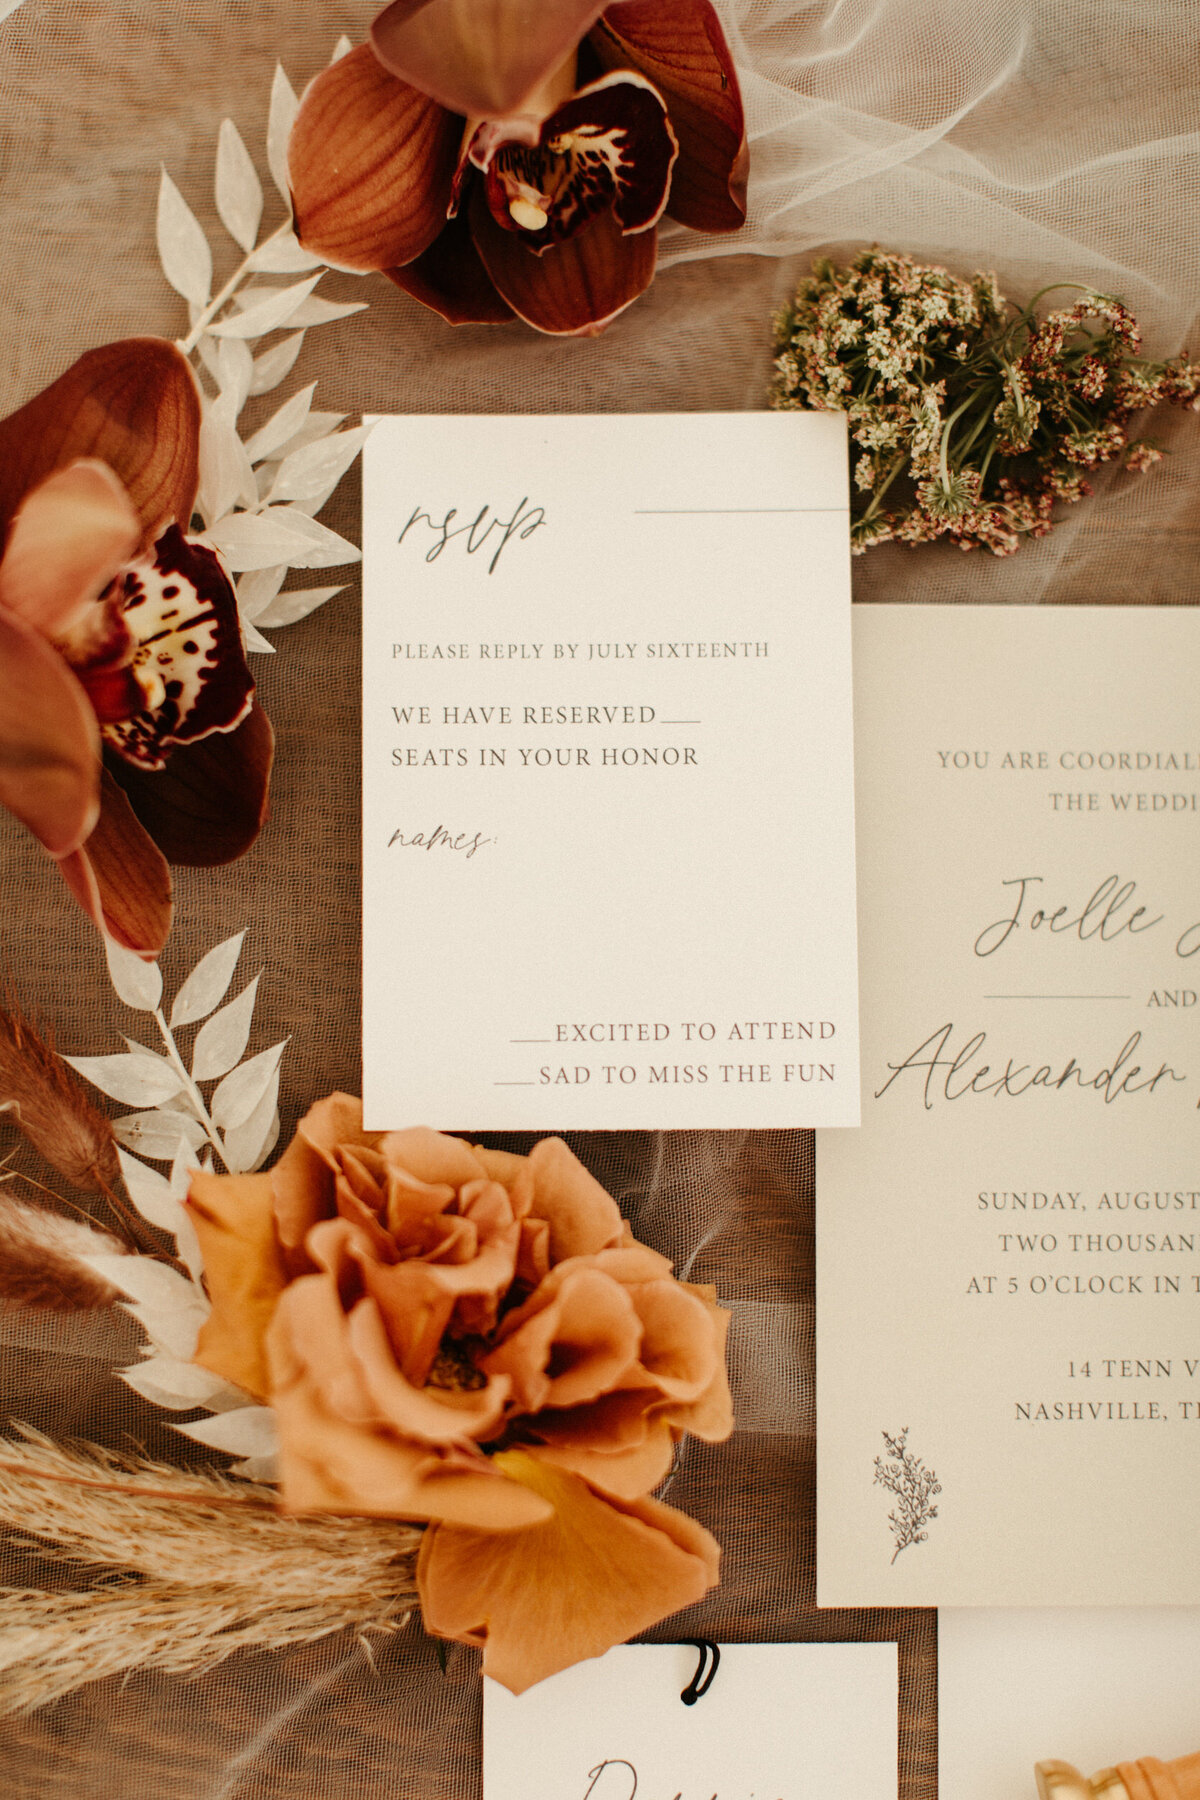 Wedding RSVP card with flowers around it